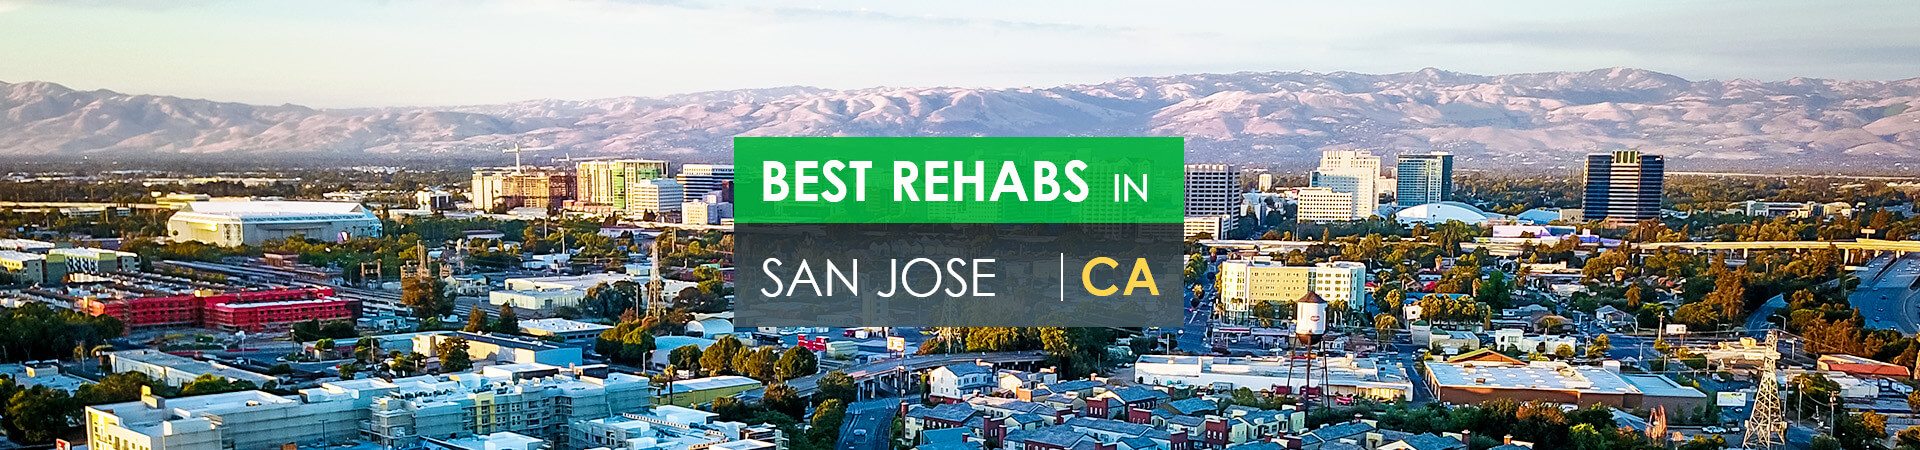 Best rehabs in San Jose, CA